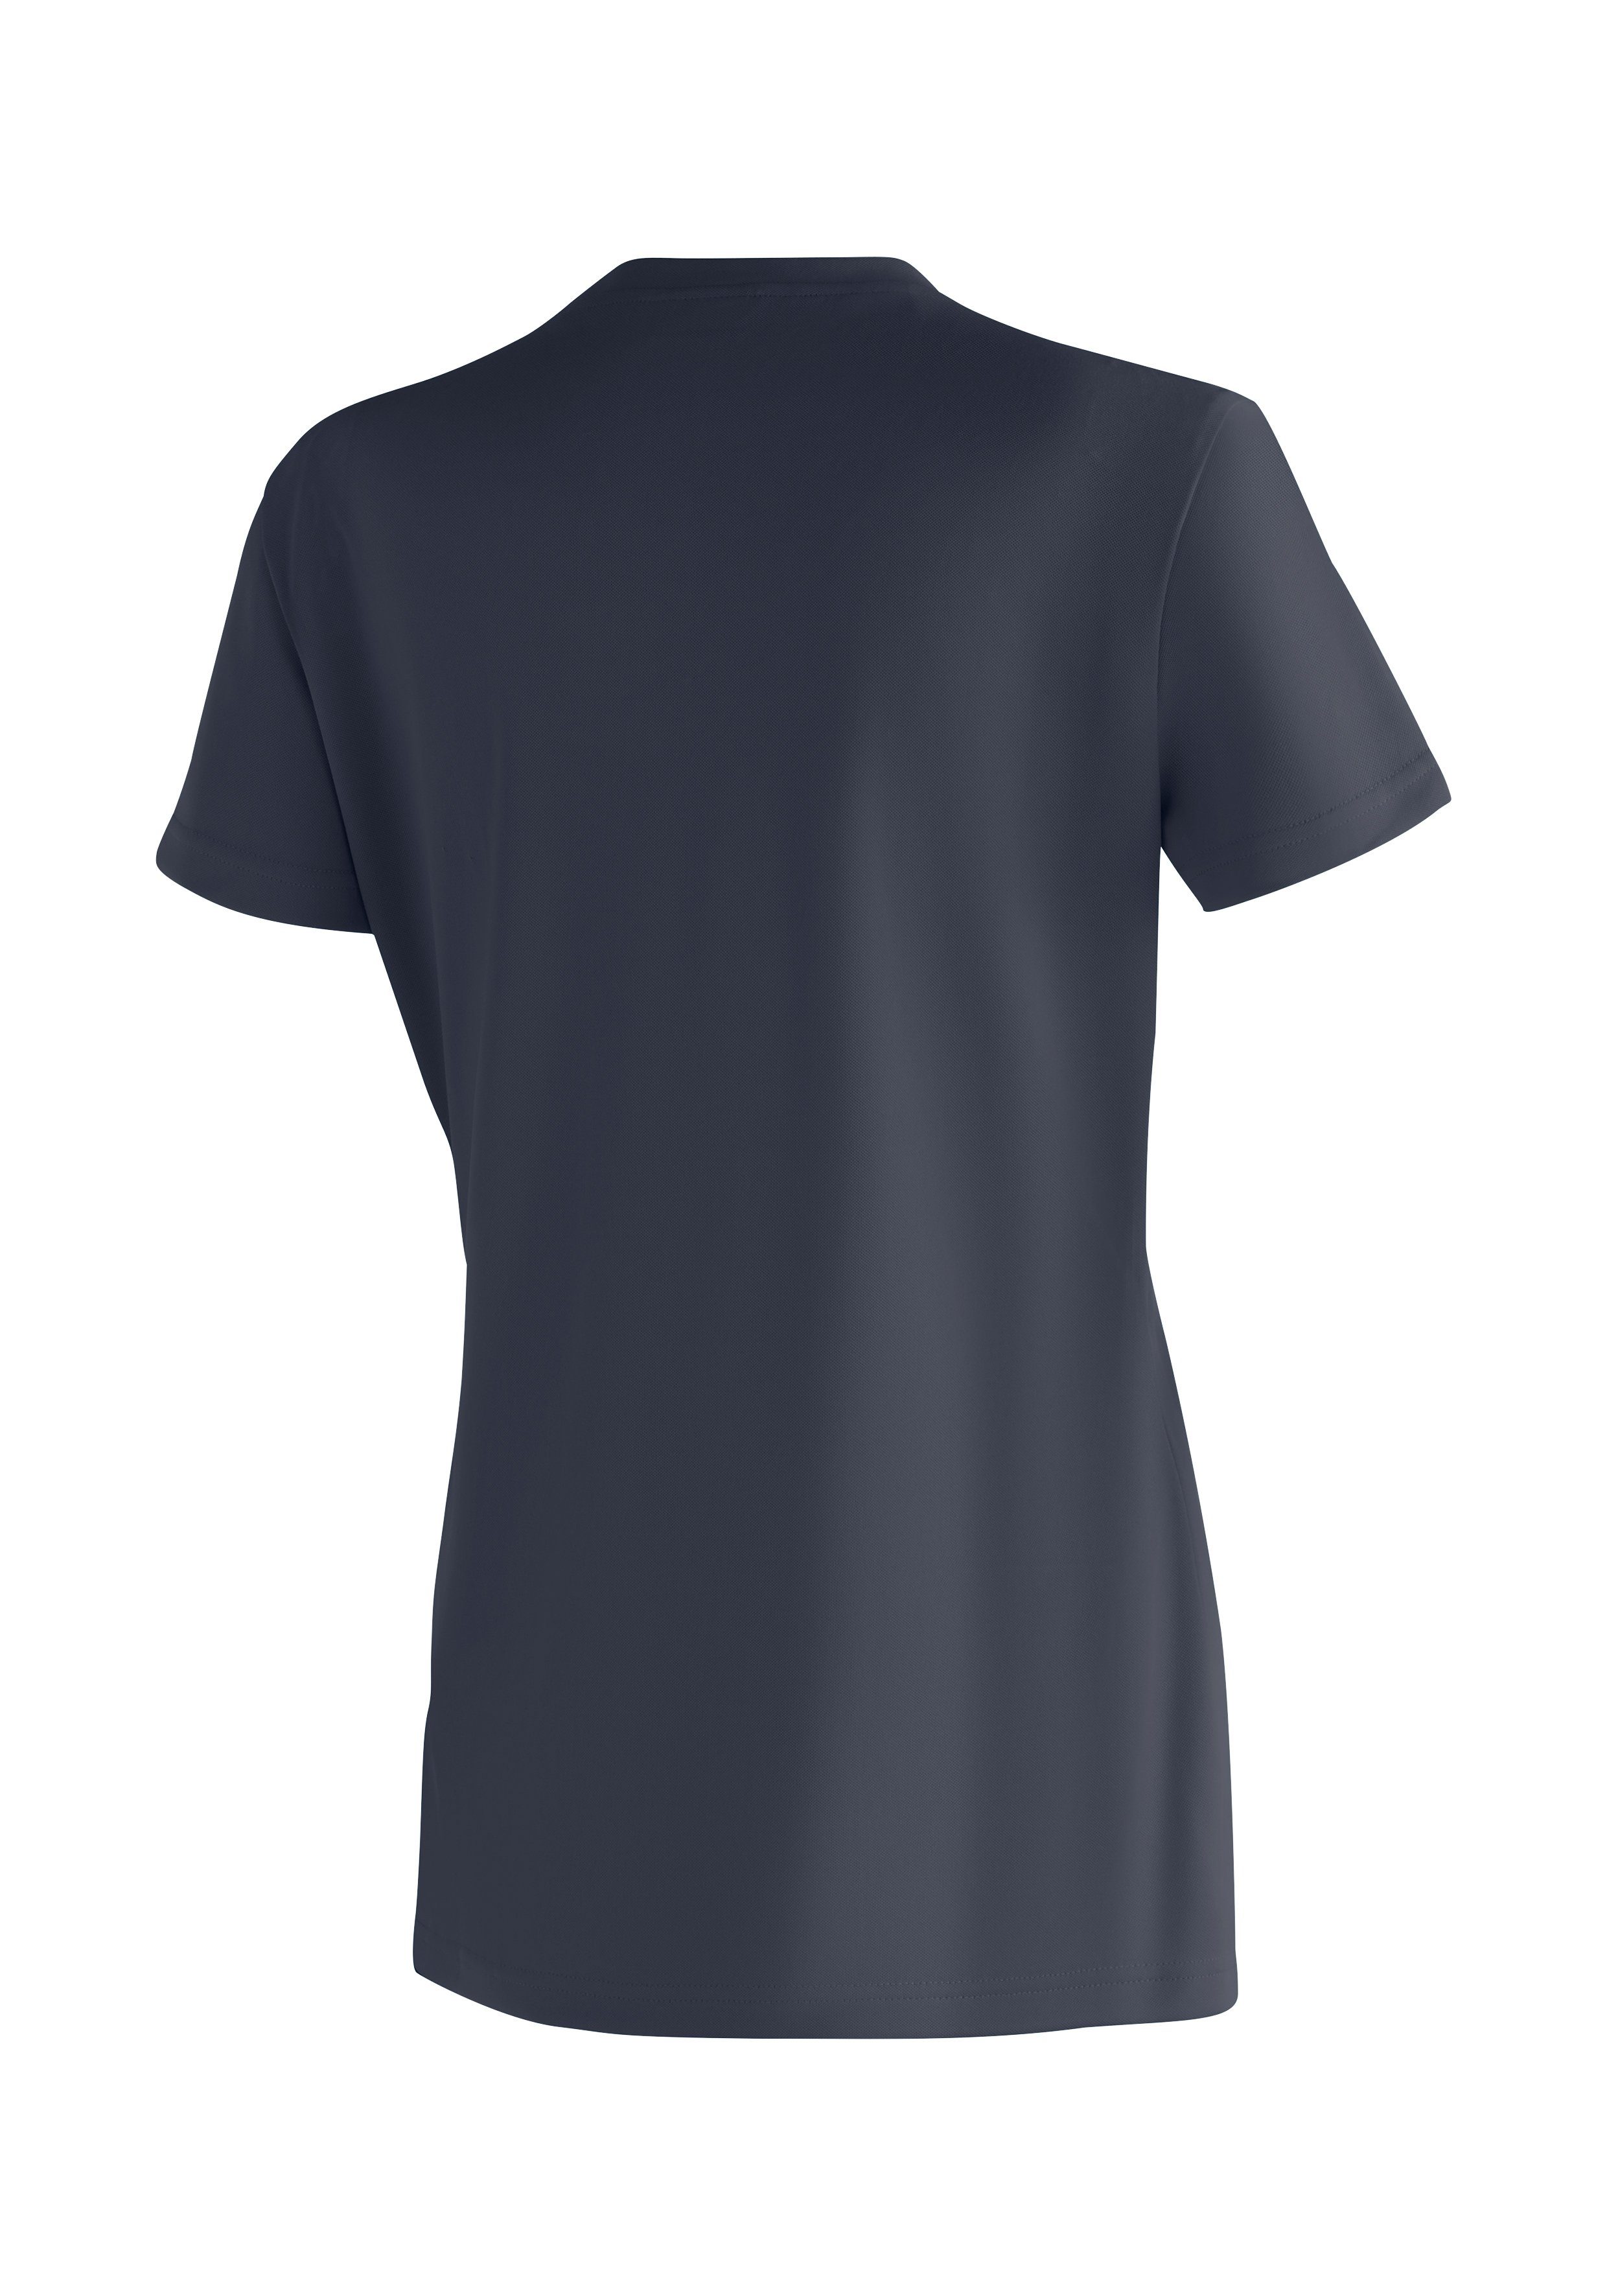 Funktional T-Shirt Waltraut vielseitiges hoher Sports Maier mit Print Funktionsshirt dunkelblau Passformstabilität